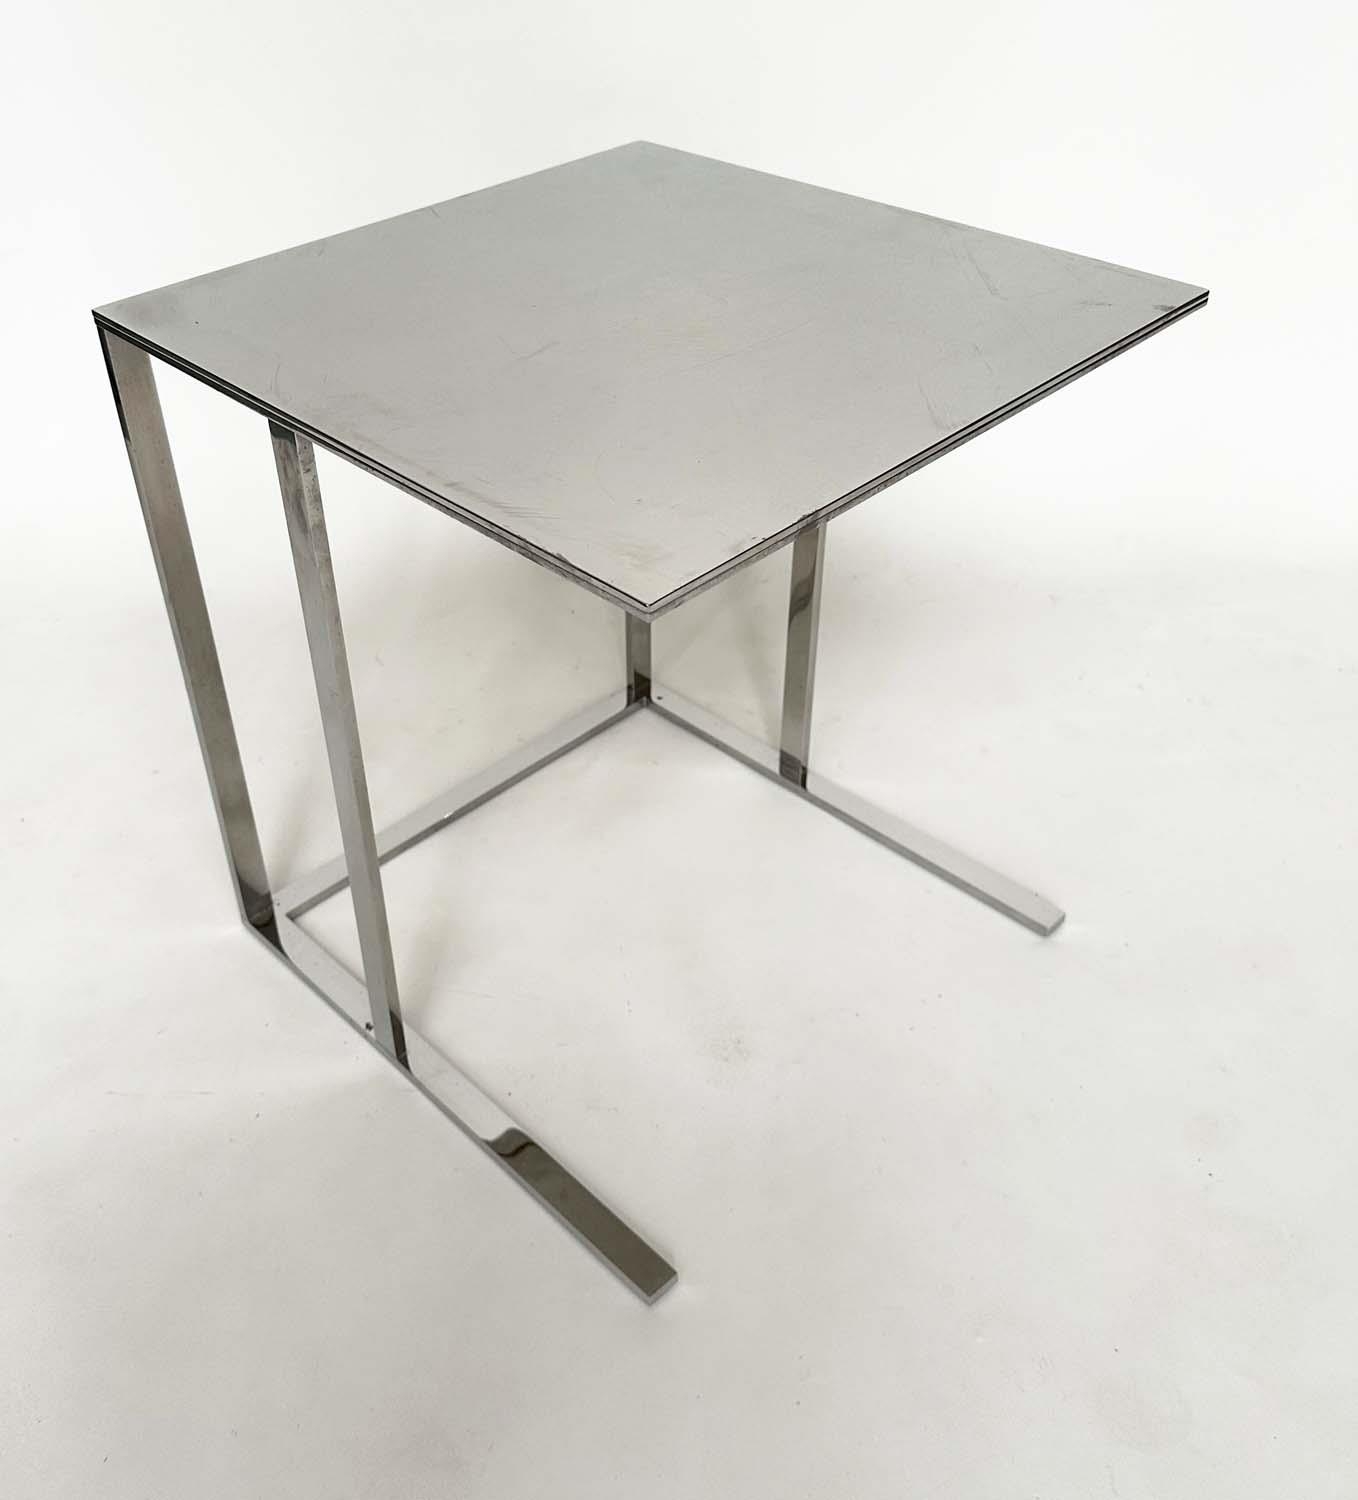 B&B ITALIA MAXALTO ELLOS TABLES, a pair, by Antonio Citterio with applied label, 52cm H x 46cm W x - Image 4 of 8